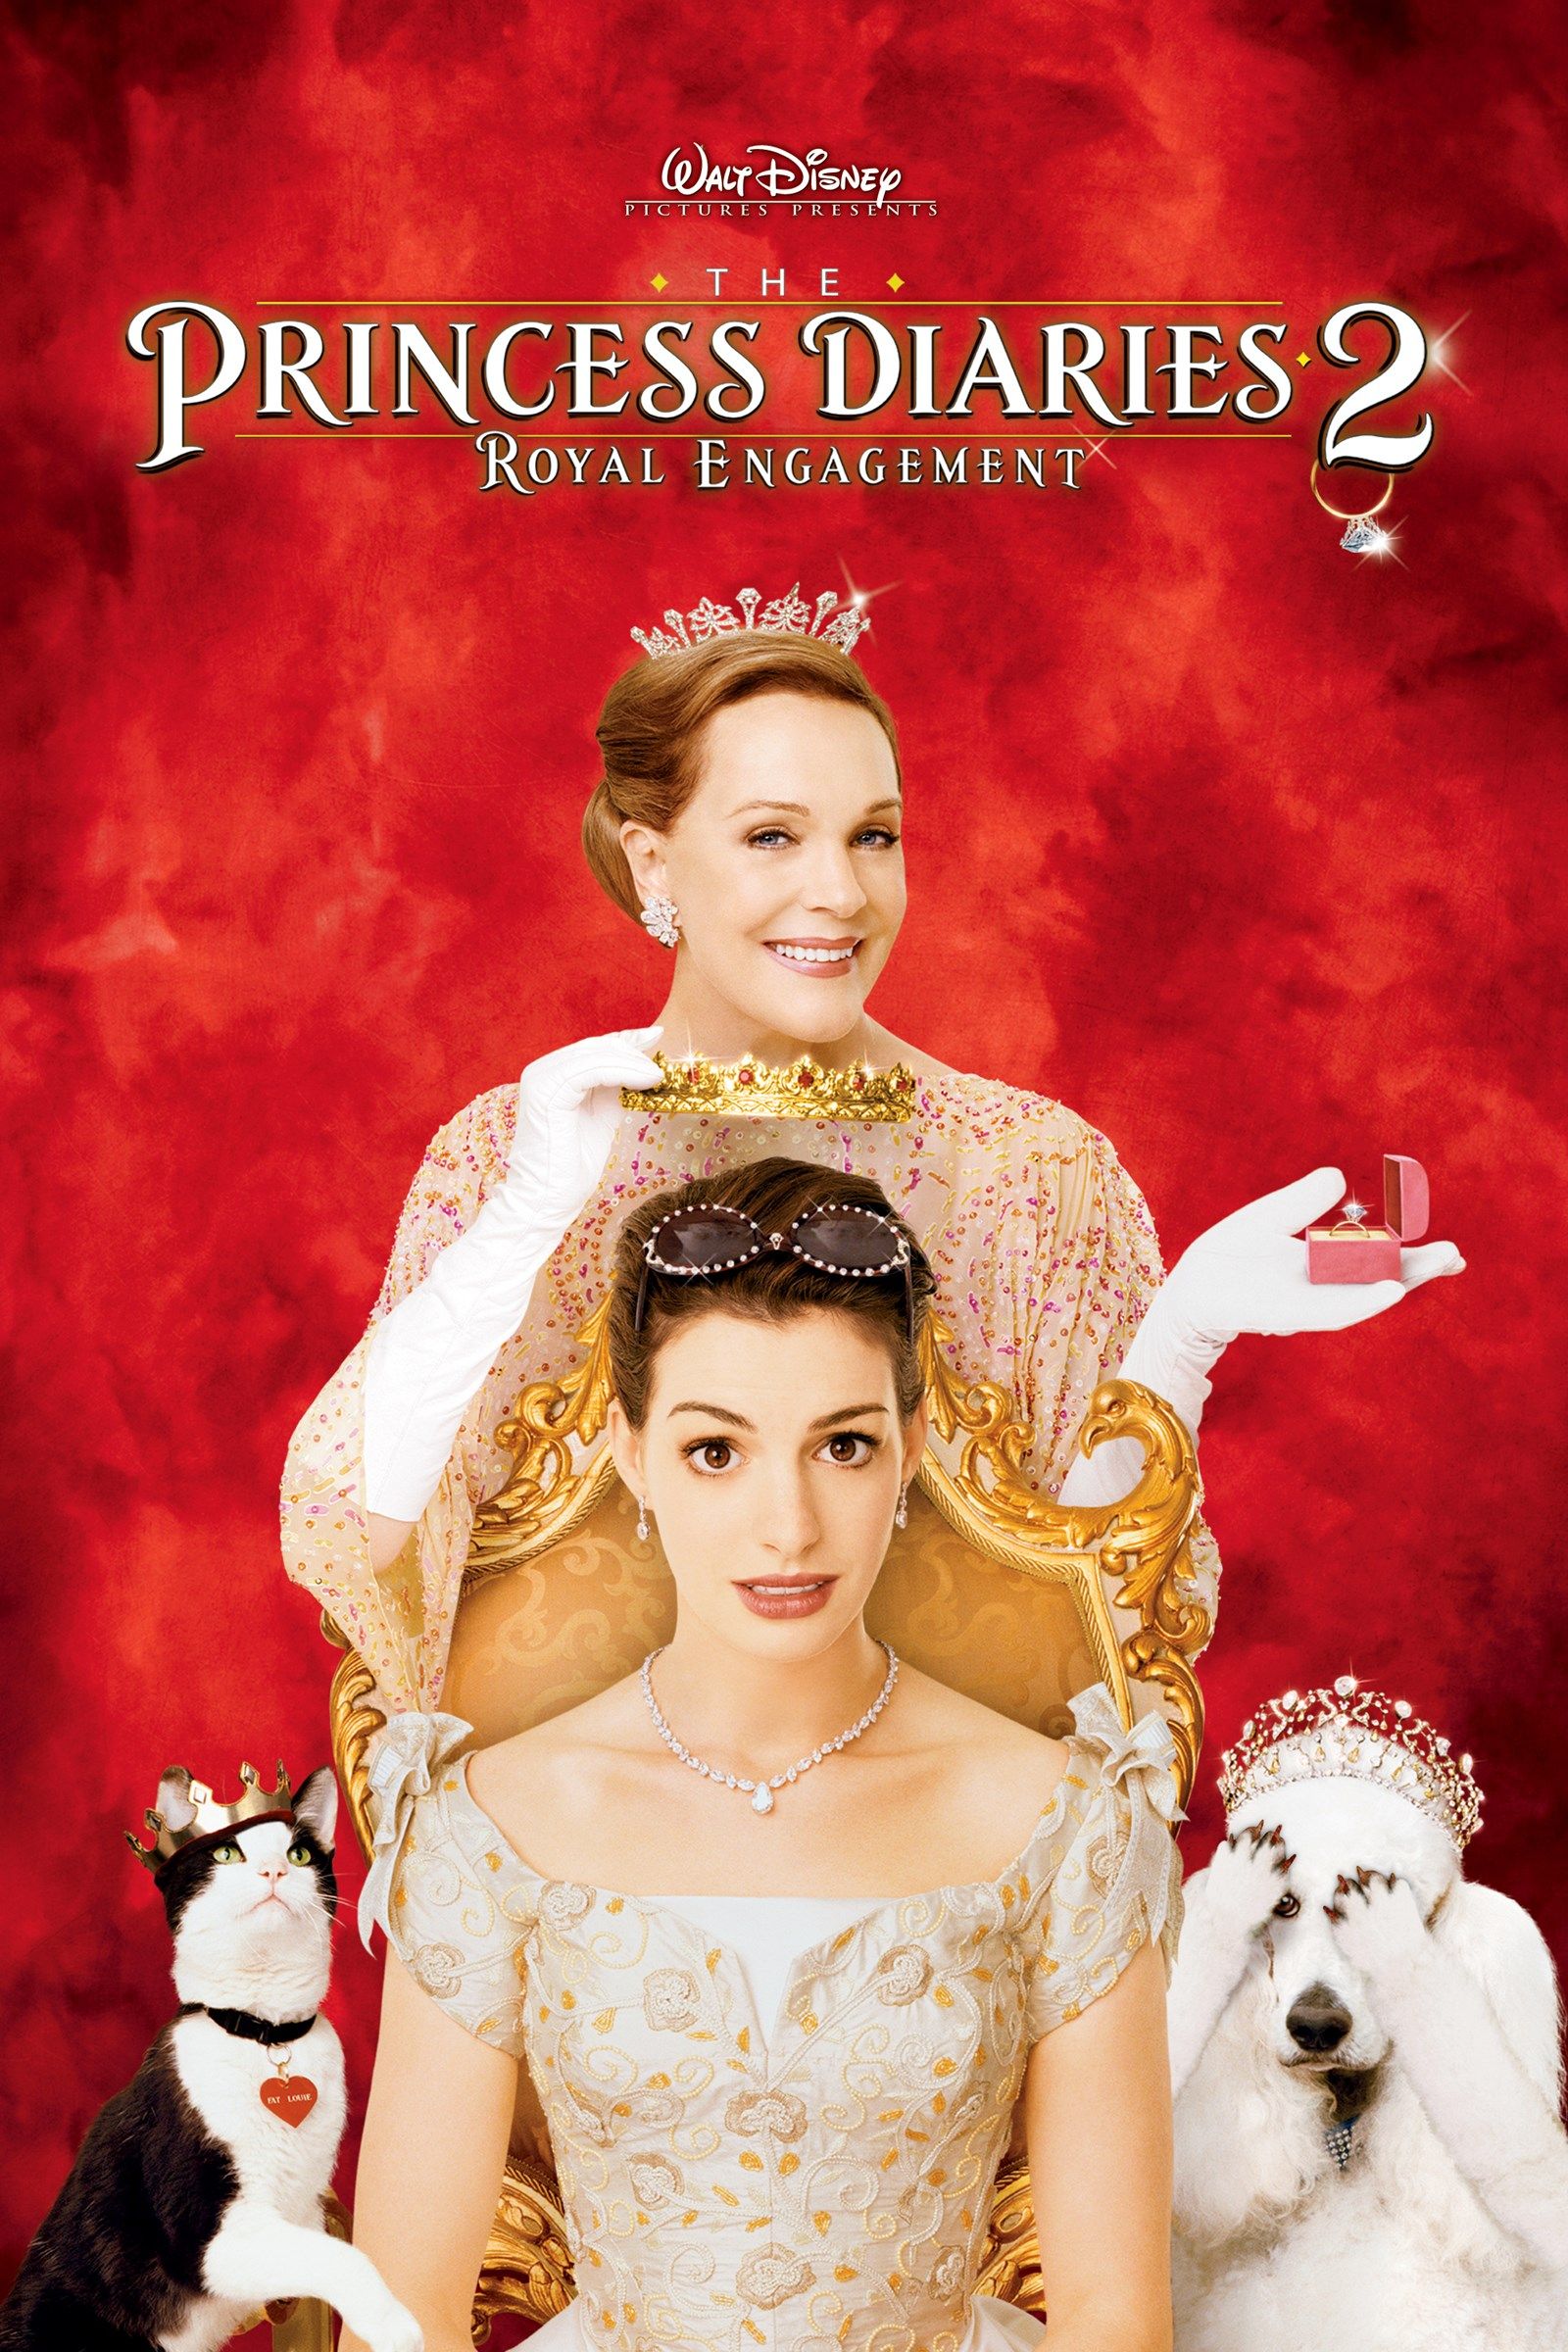 The Princess Diaries 2: Royal Engagement (2004) Hindi Dubbed BluRay download full movie